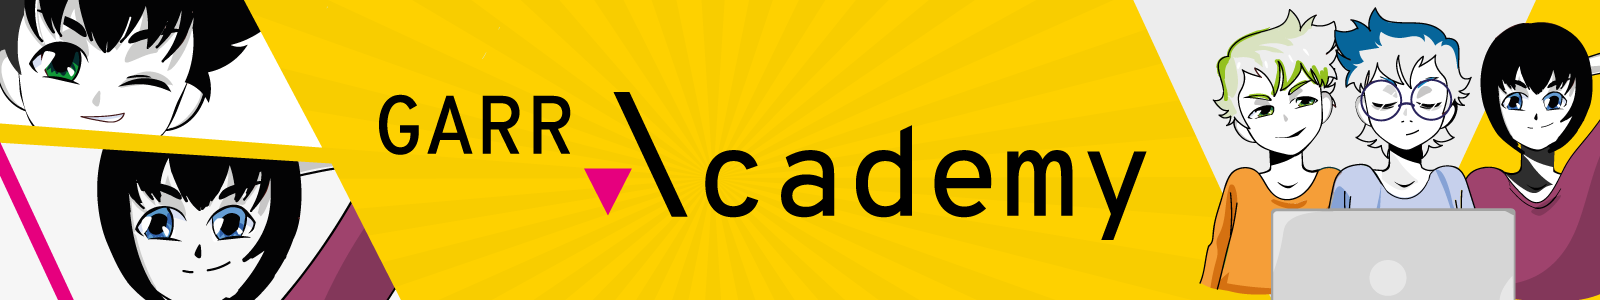 Garr Academy - a wonderful experience